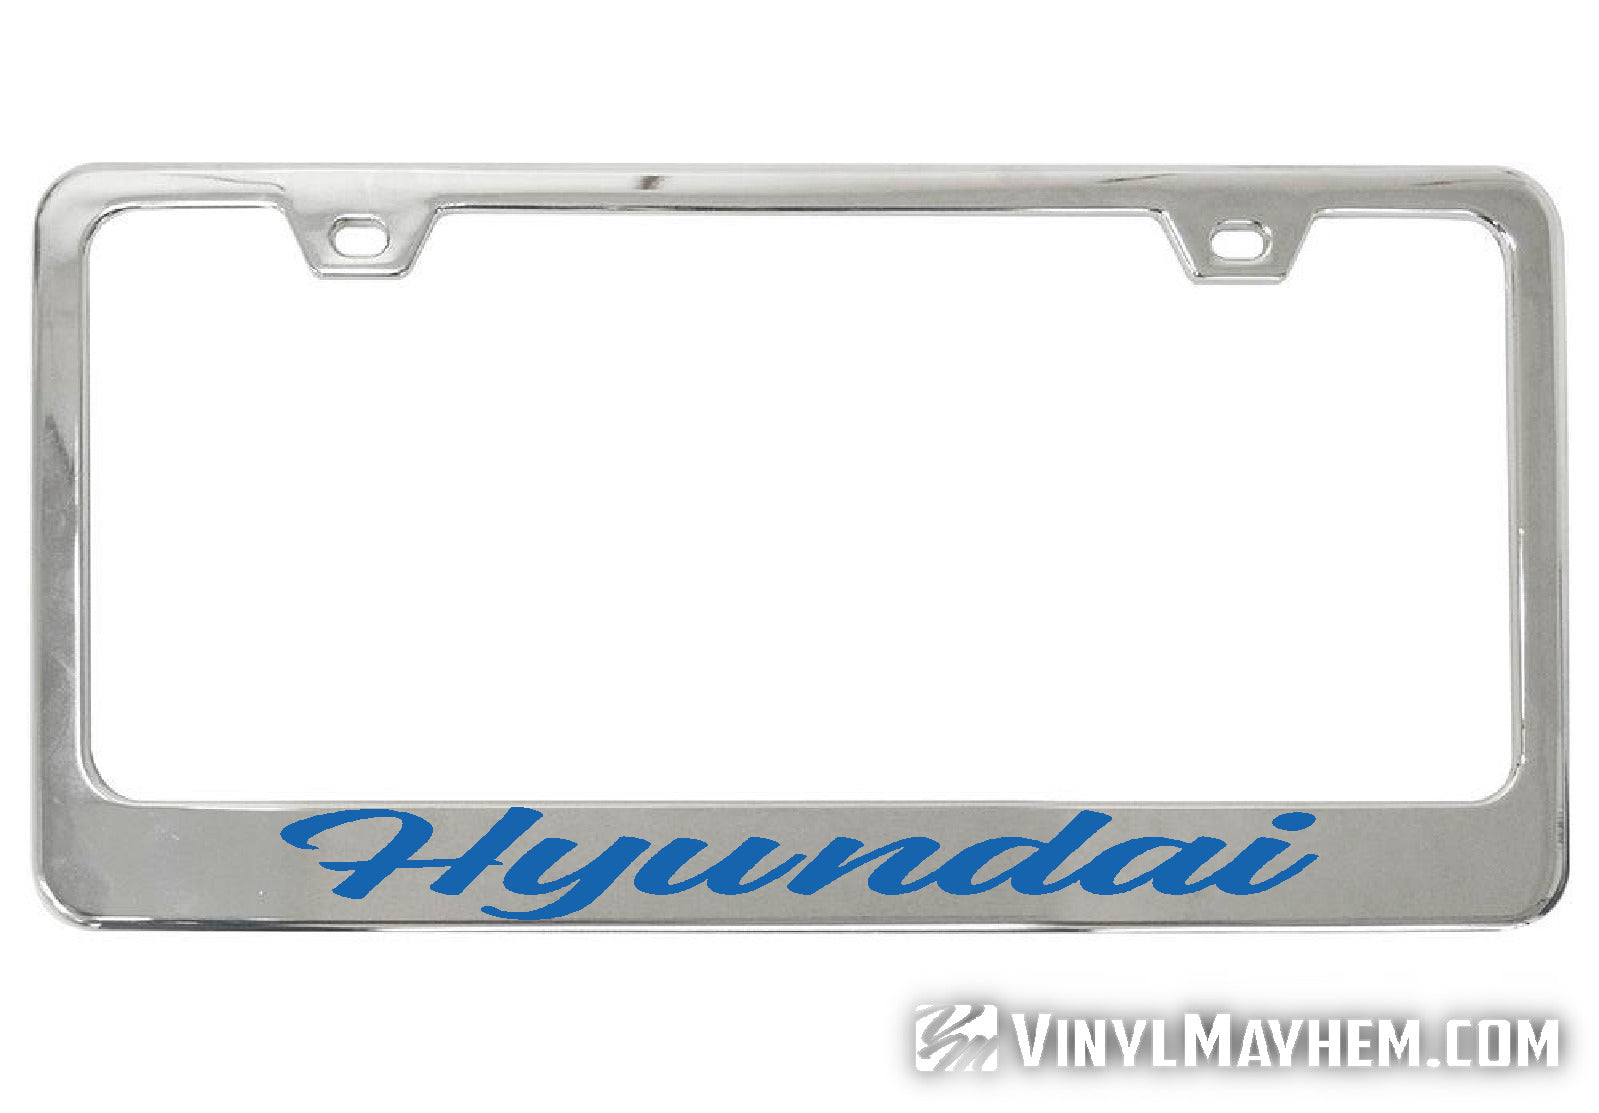 Hyundai chrome license plate frame